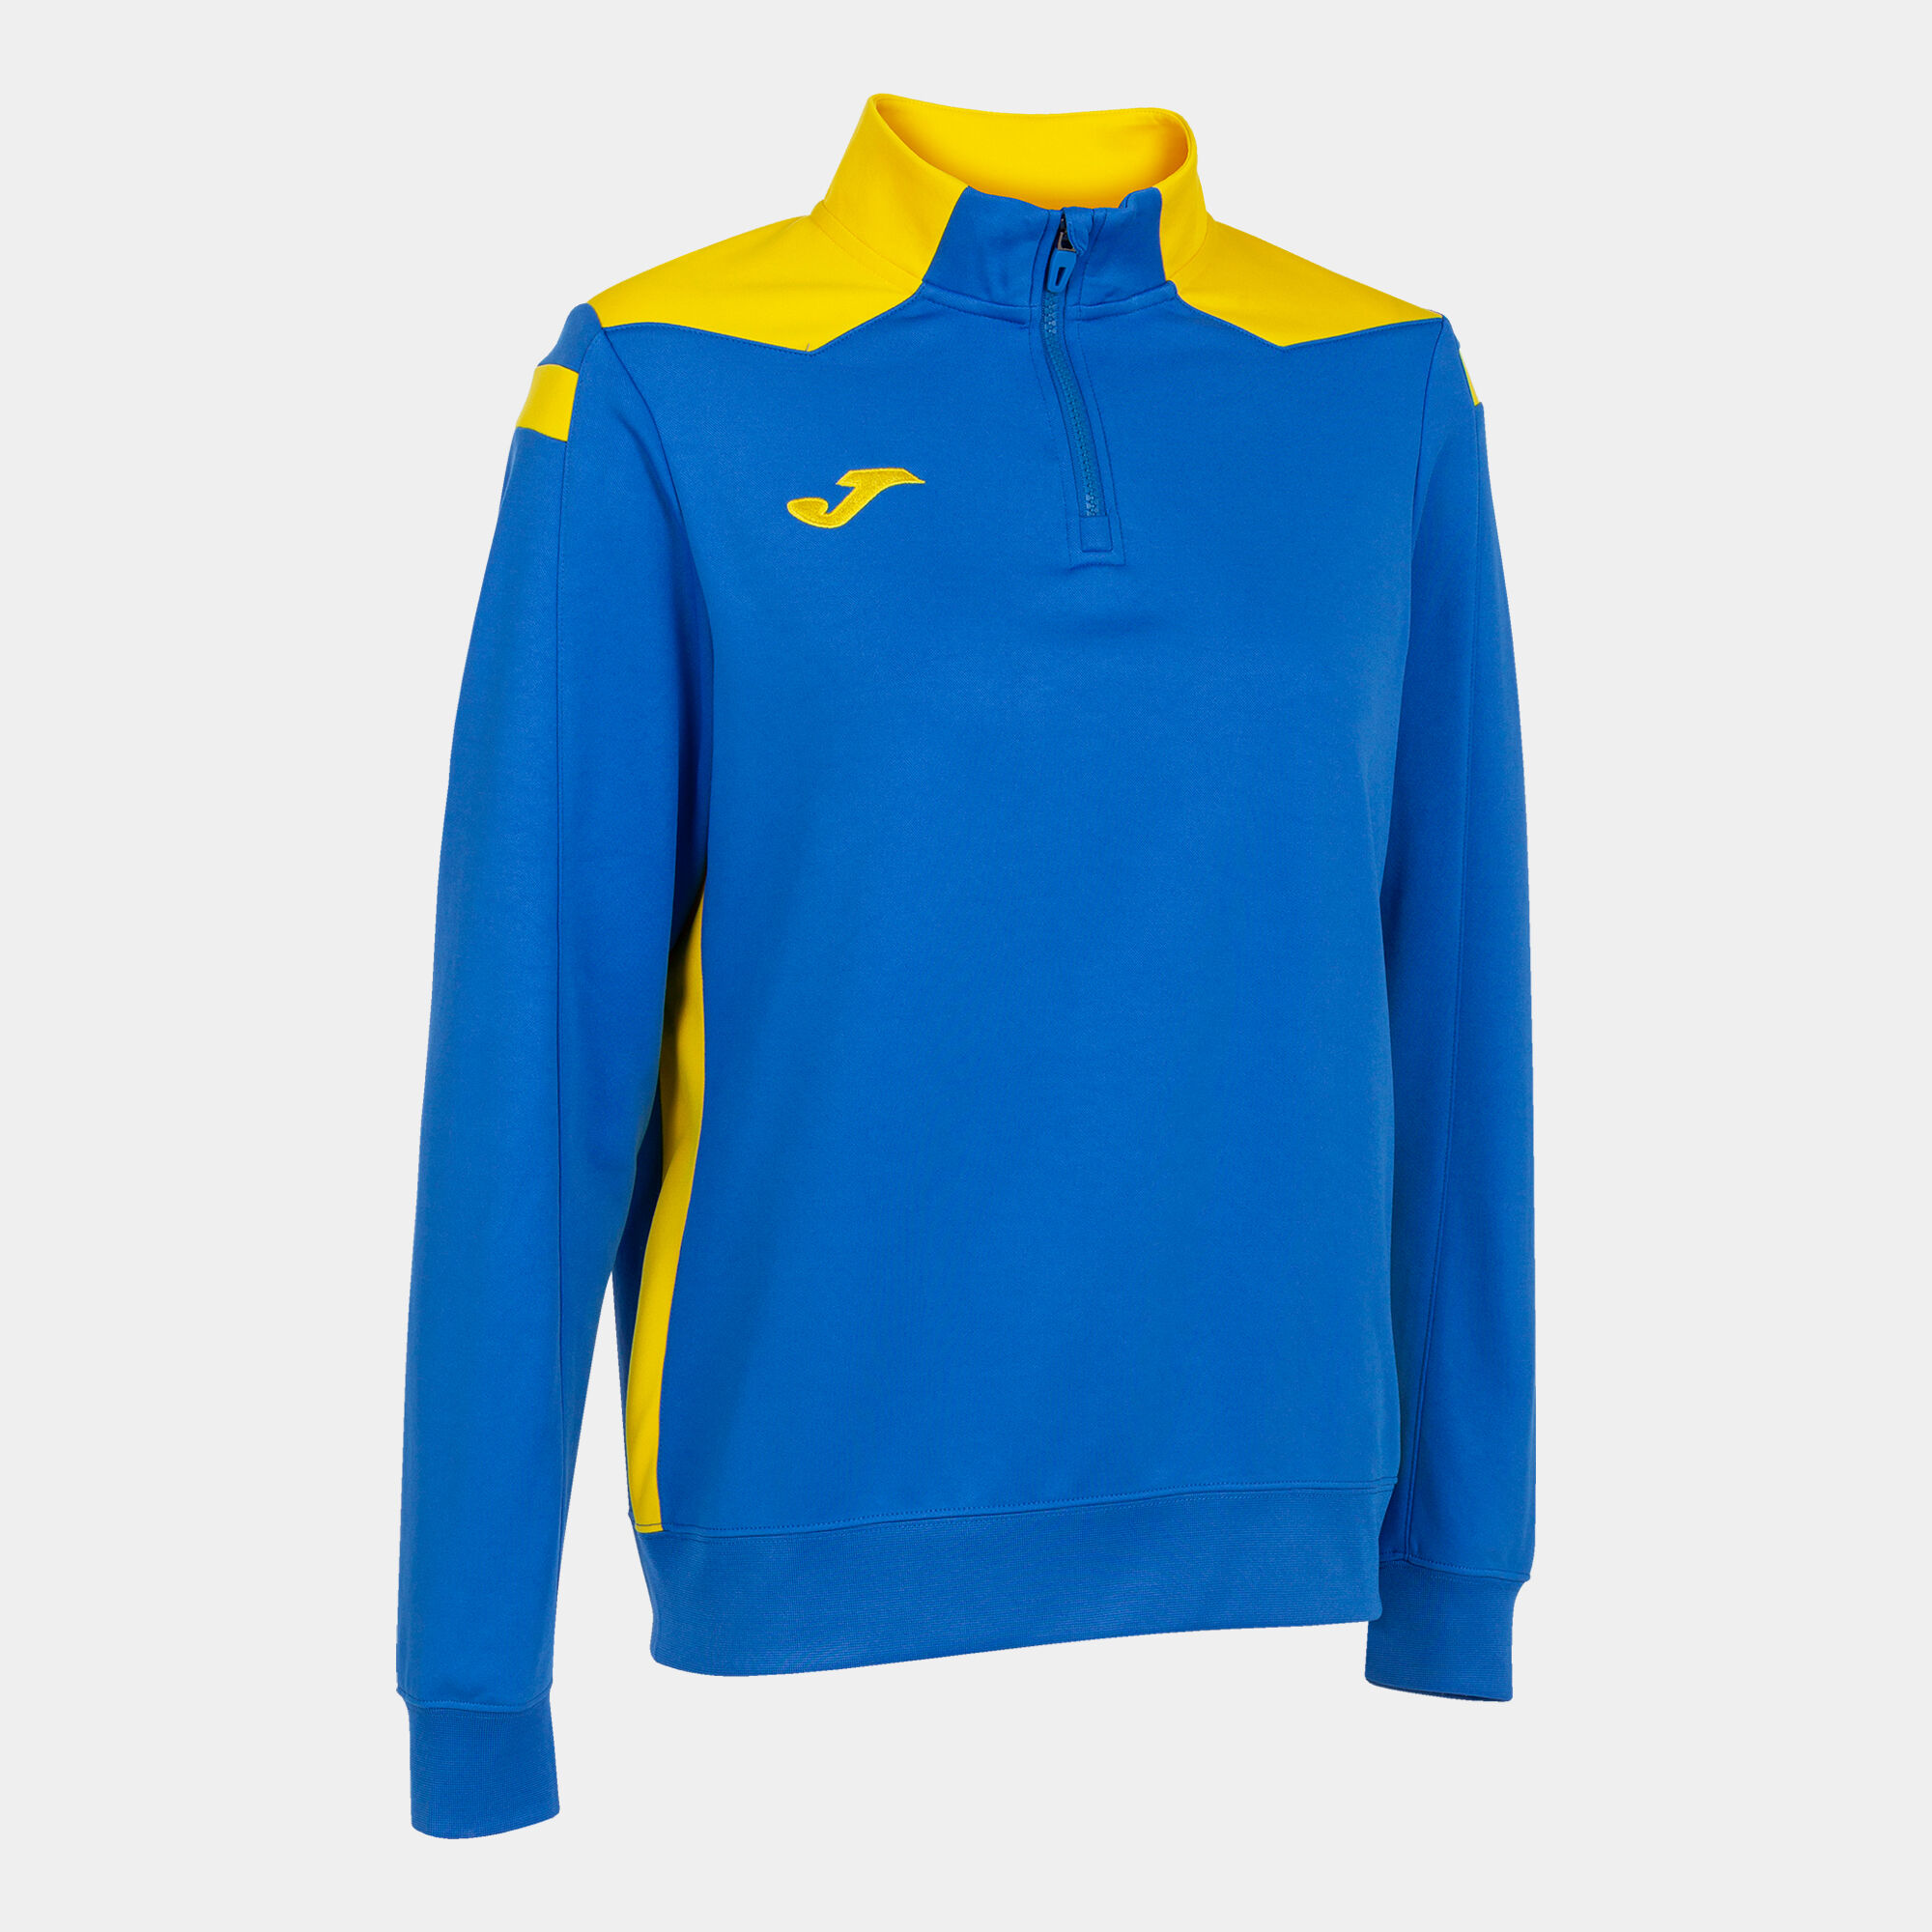 Sweat-shirt femme Championship VI bleu roi jaune